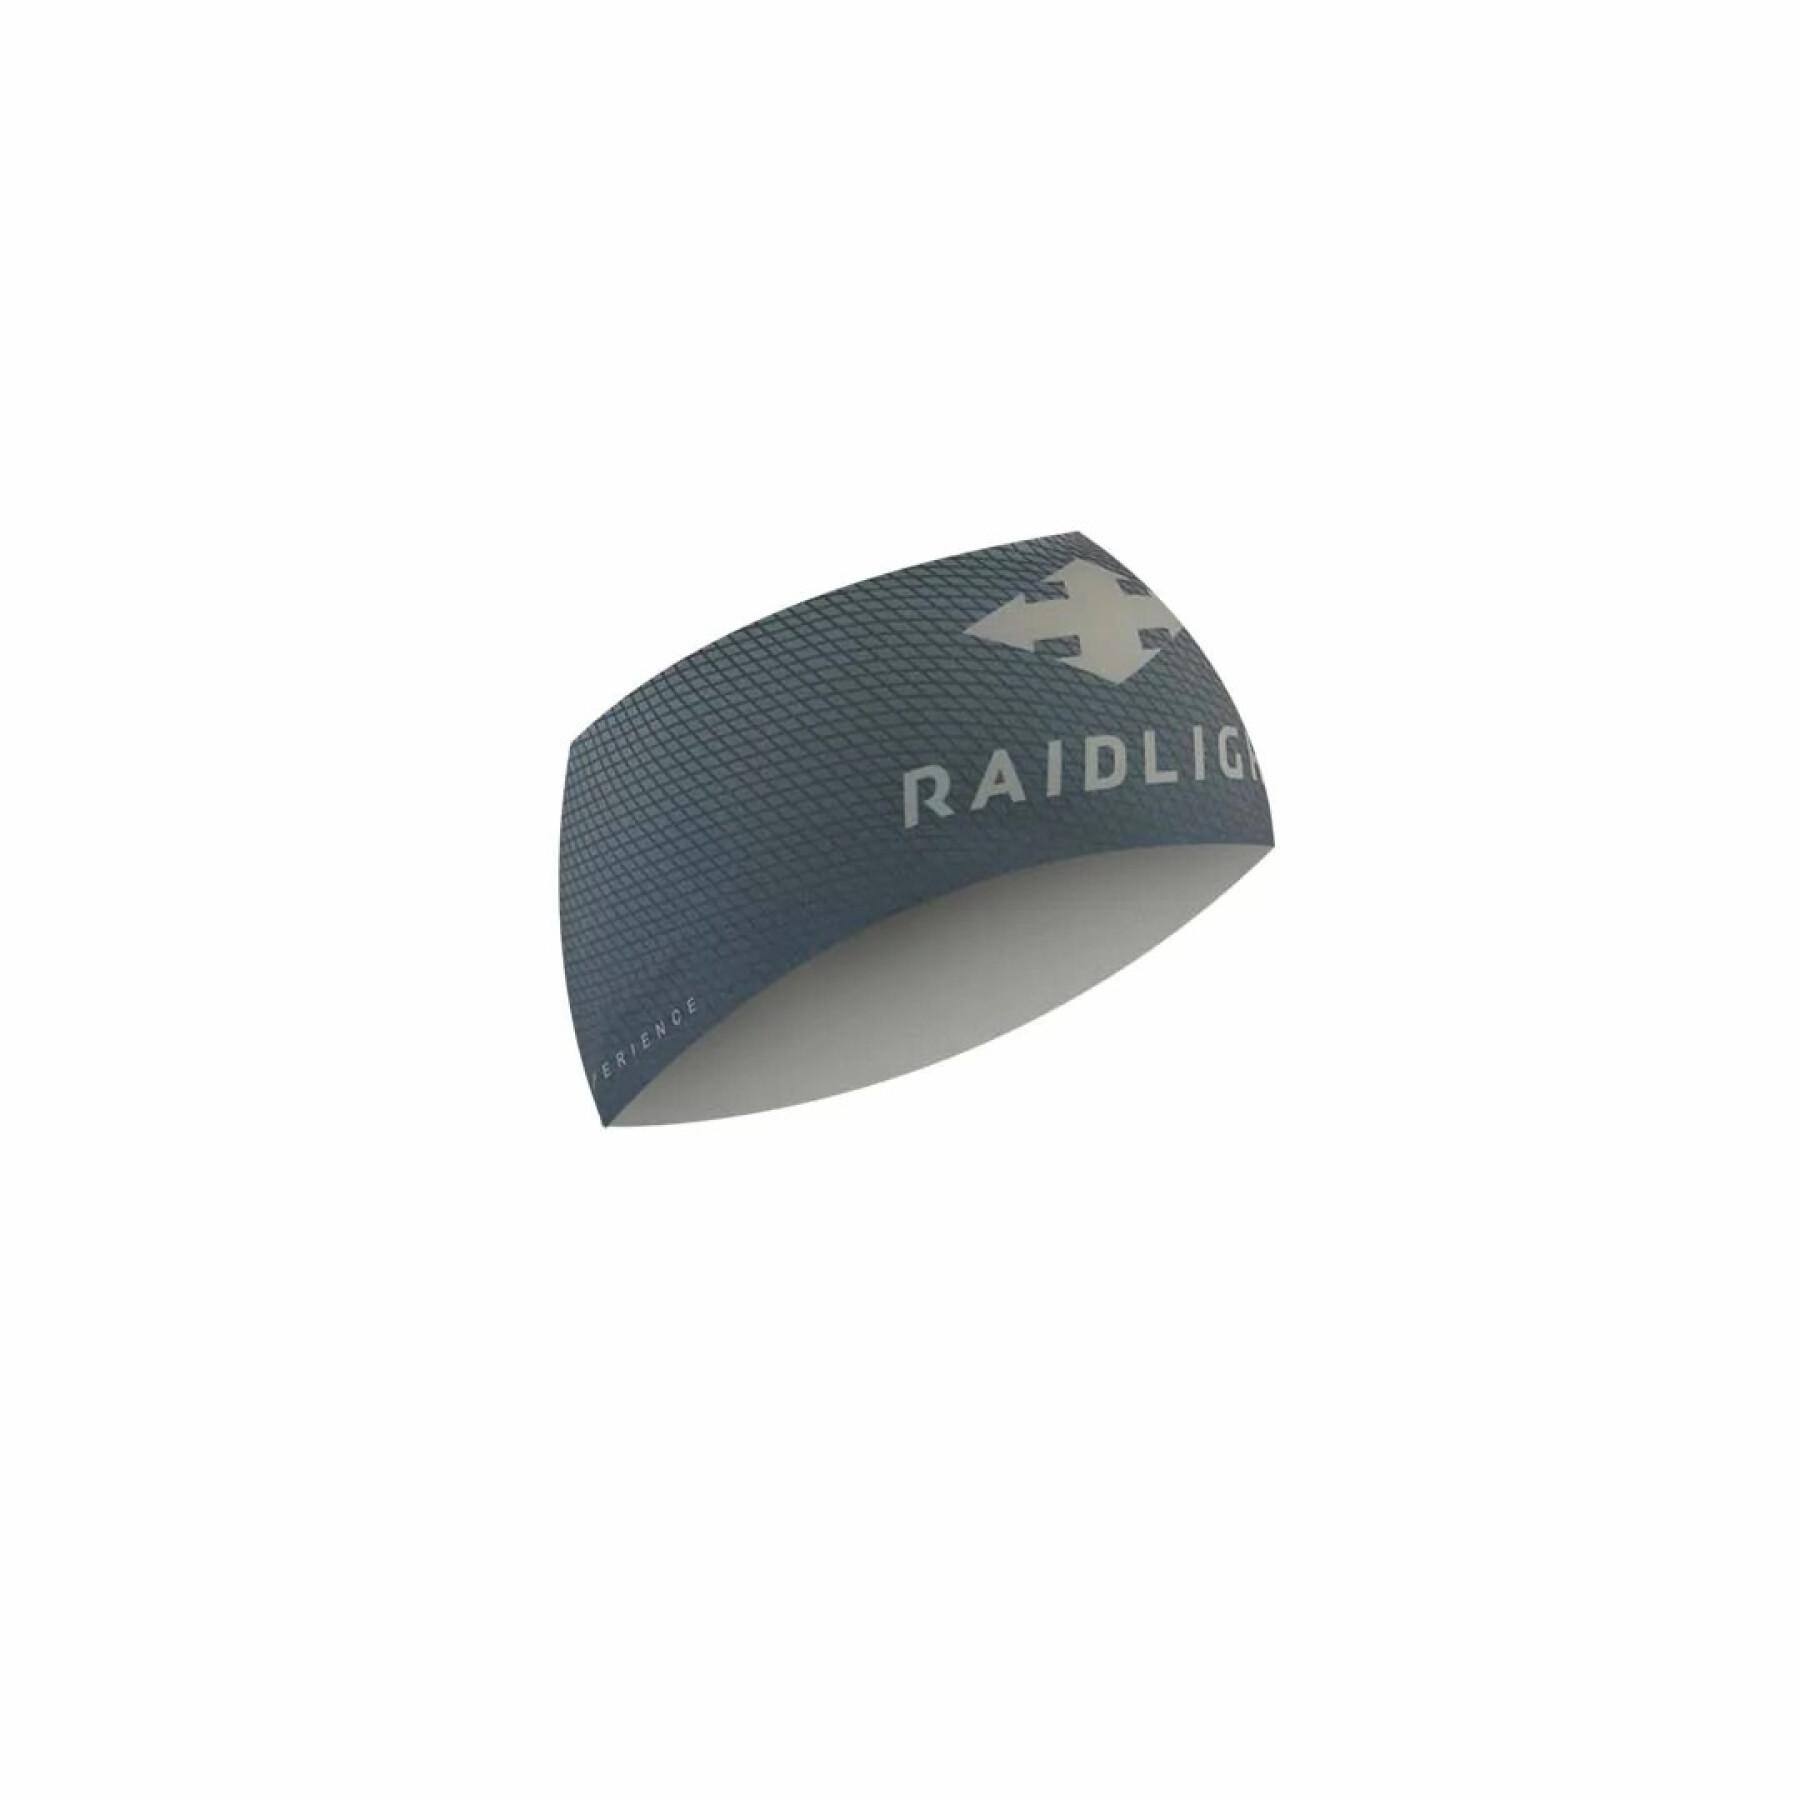 Winter headband for women RaidLight Made in France